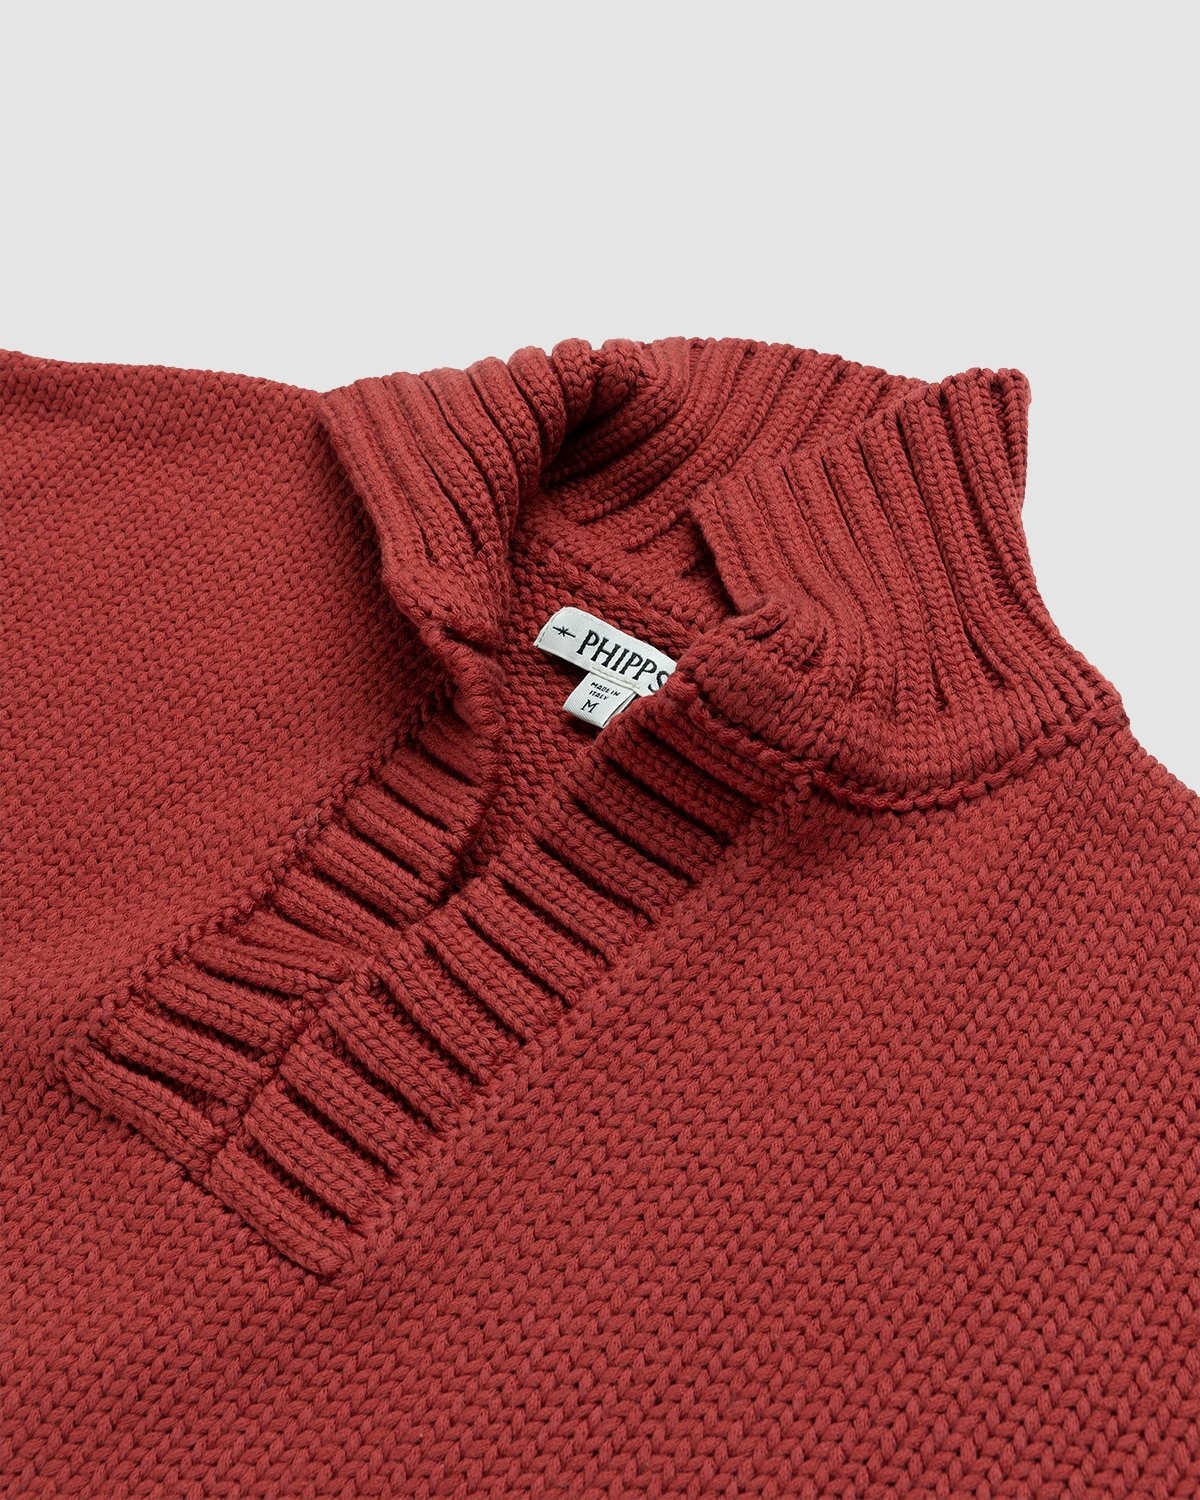 Phipps – Vareuse Sweater Rust - Shawlnecks - Red - Image 3